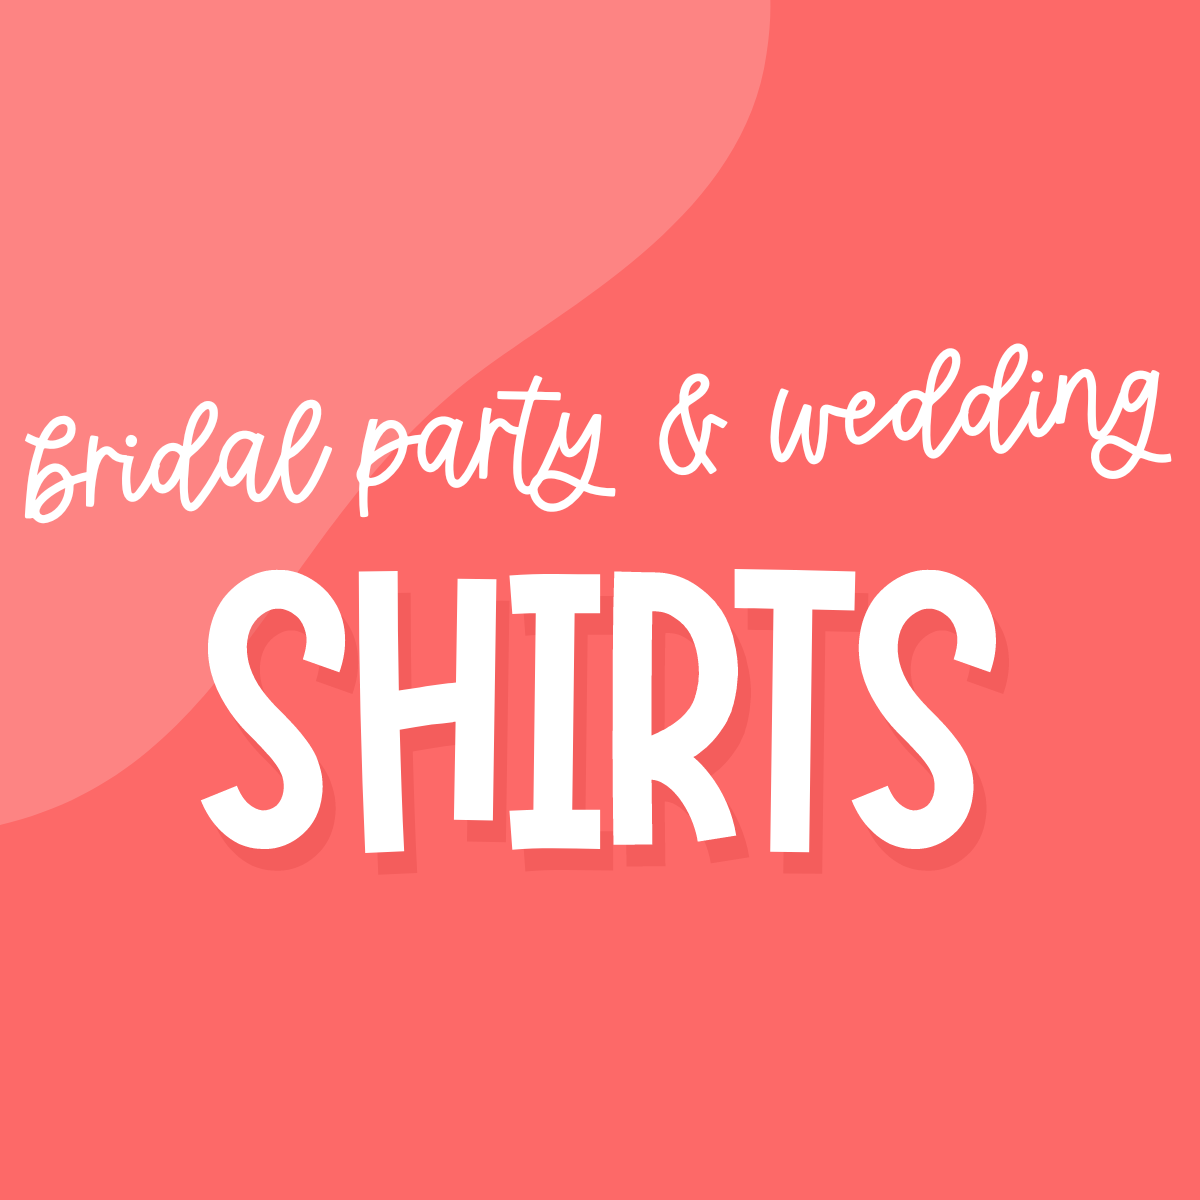 Bridal Party & Wedding Shirts